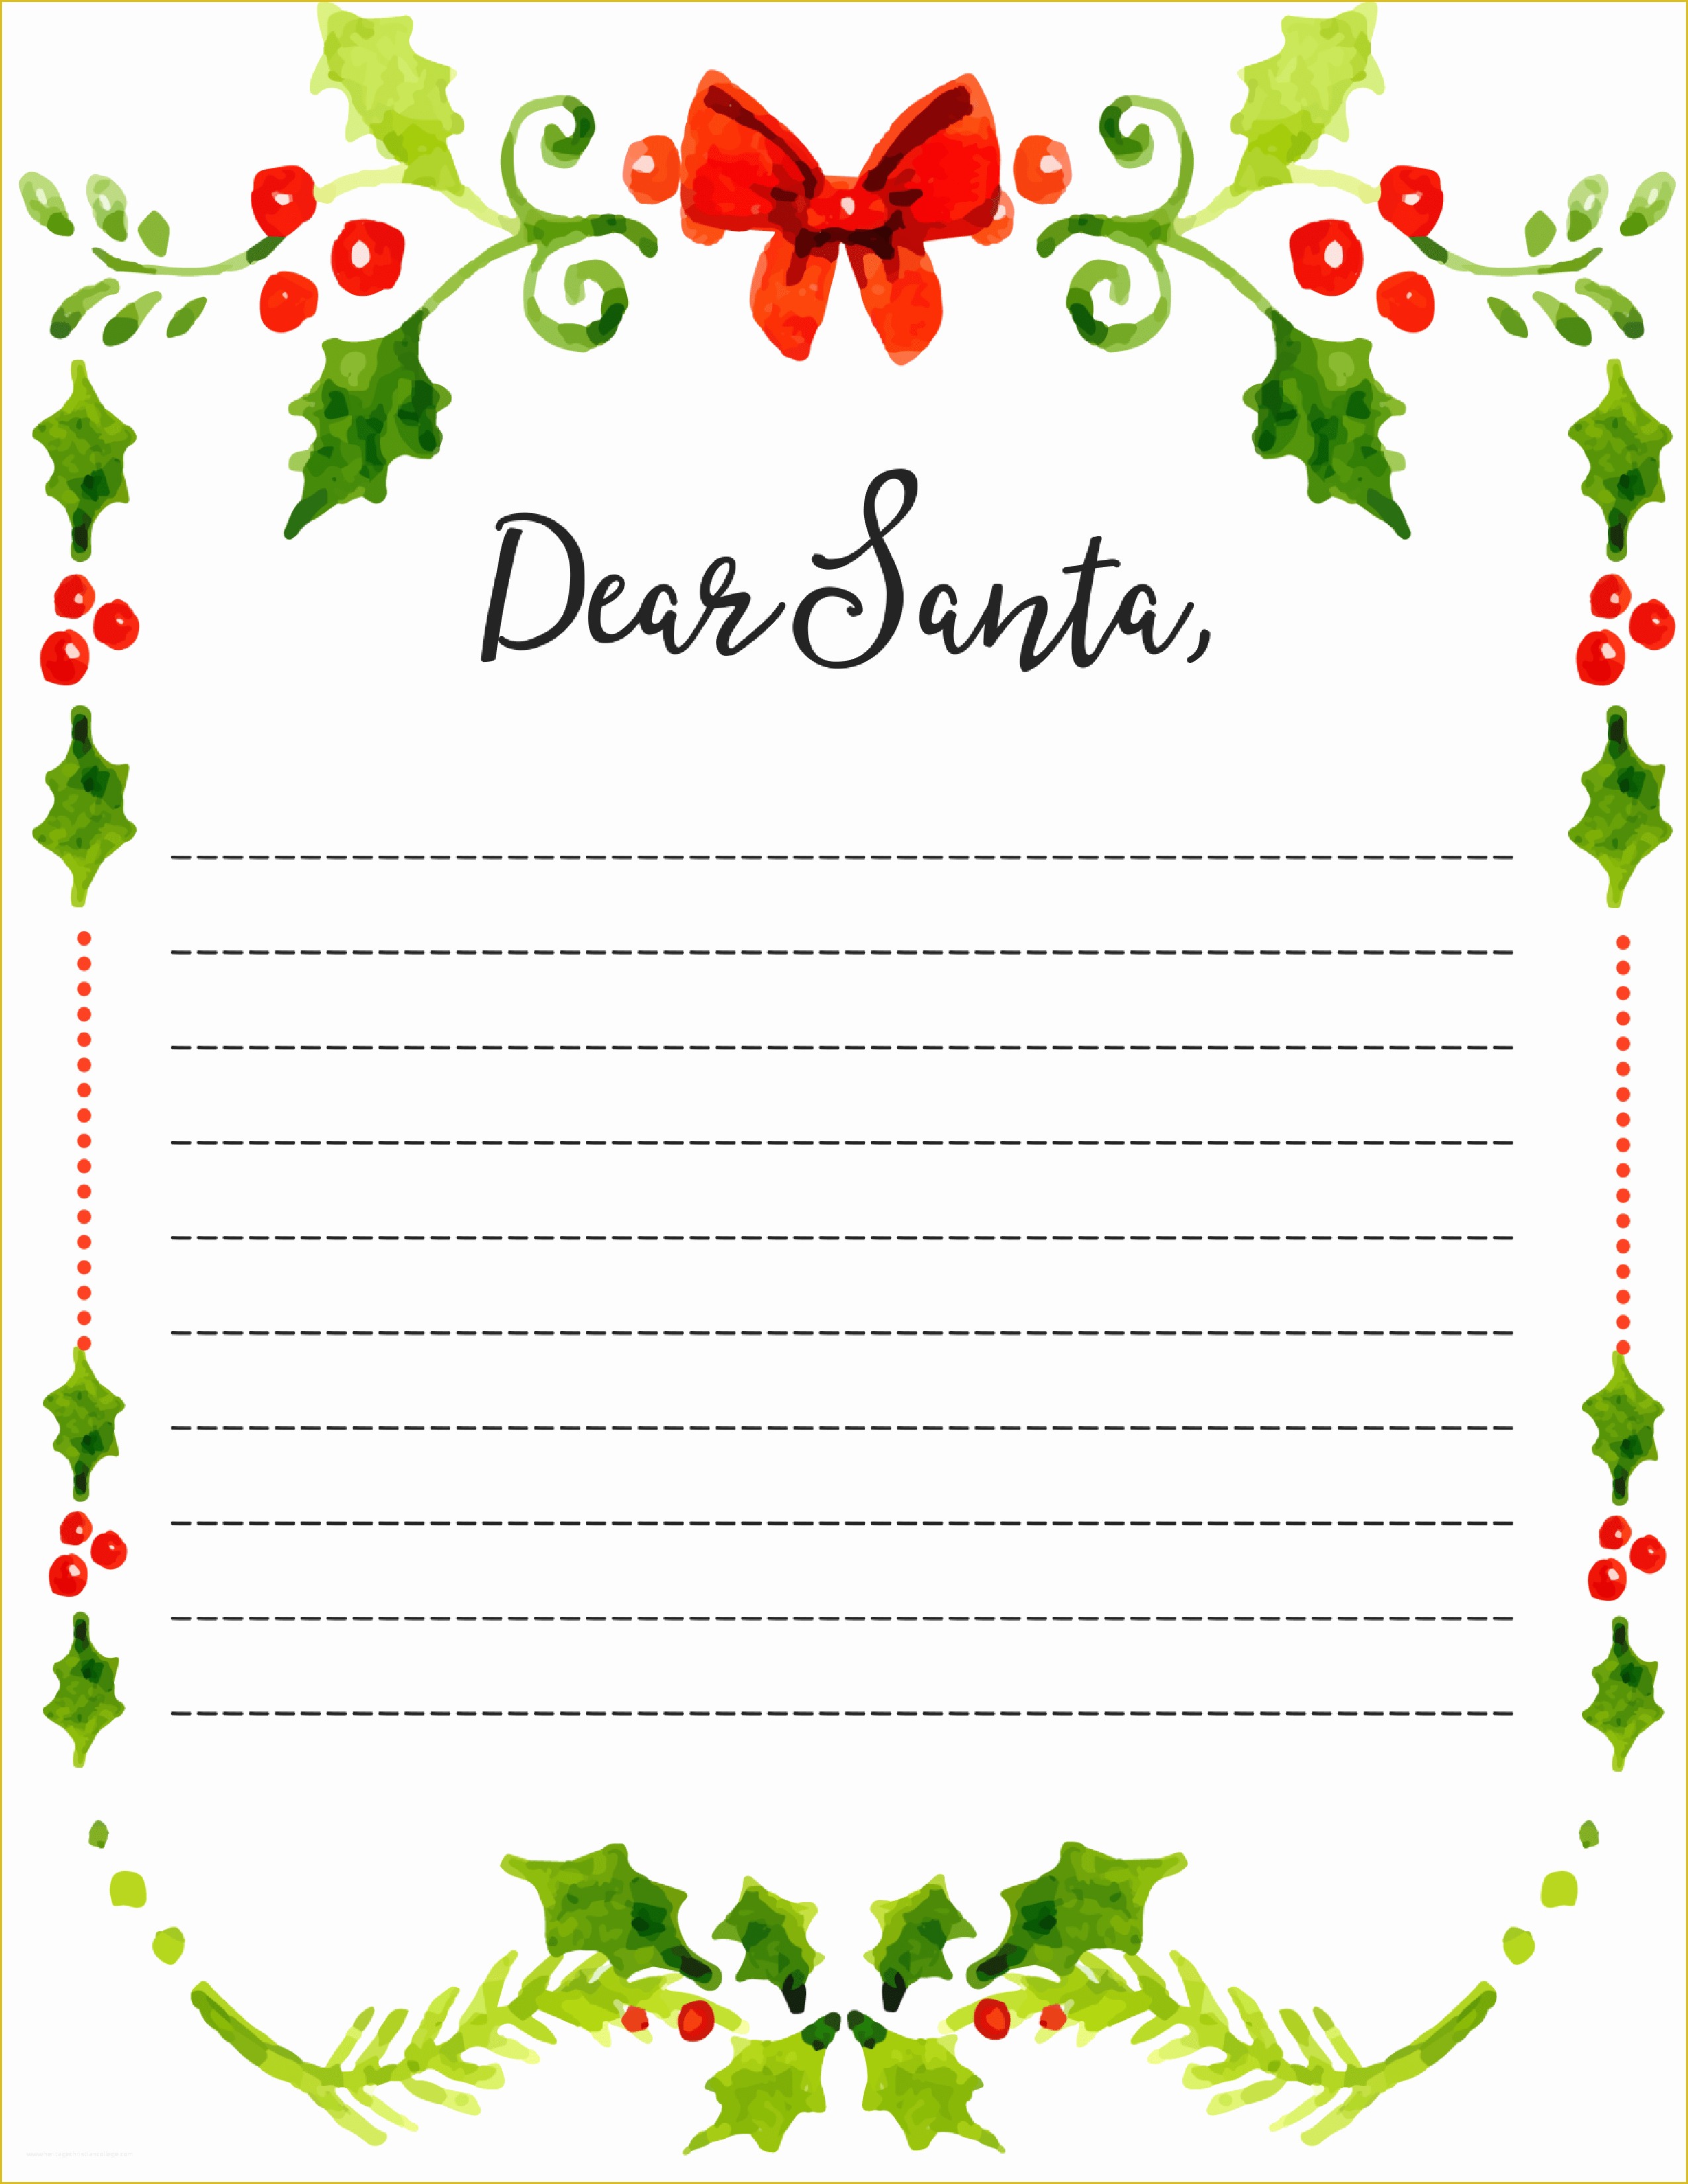 Free Letter Santa Template Download Of Dear Santa Fill In Letter Template